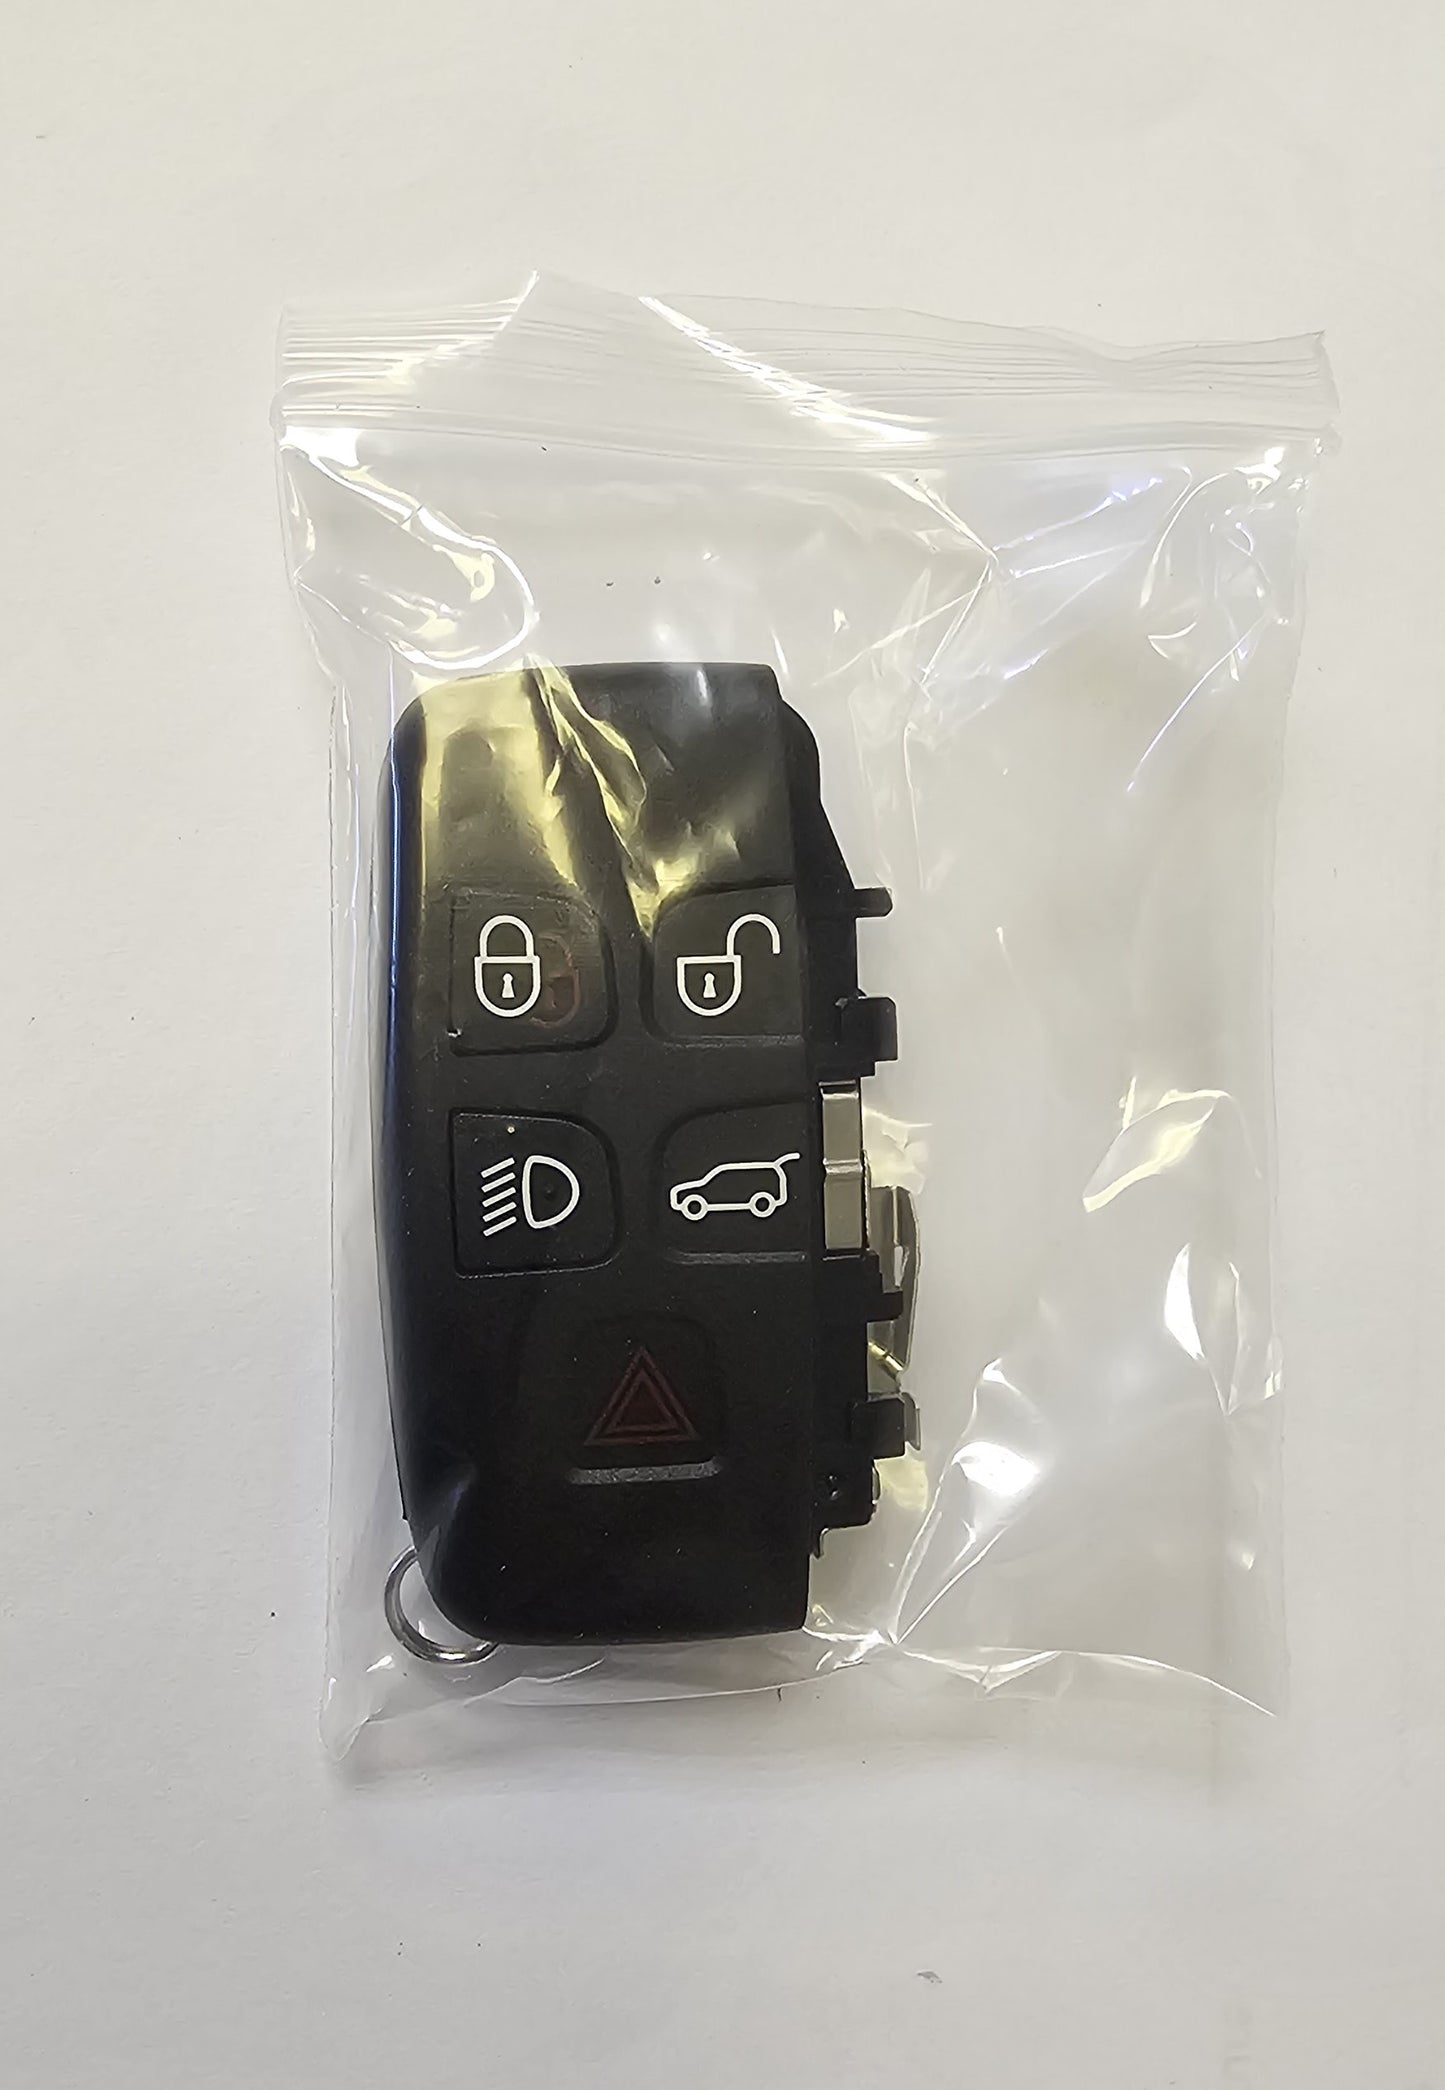 Range Rover Sport Key Remote Cover Case NUEVO ORIGEN 2014&gt; LR078921